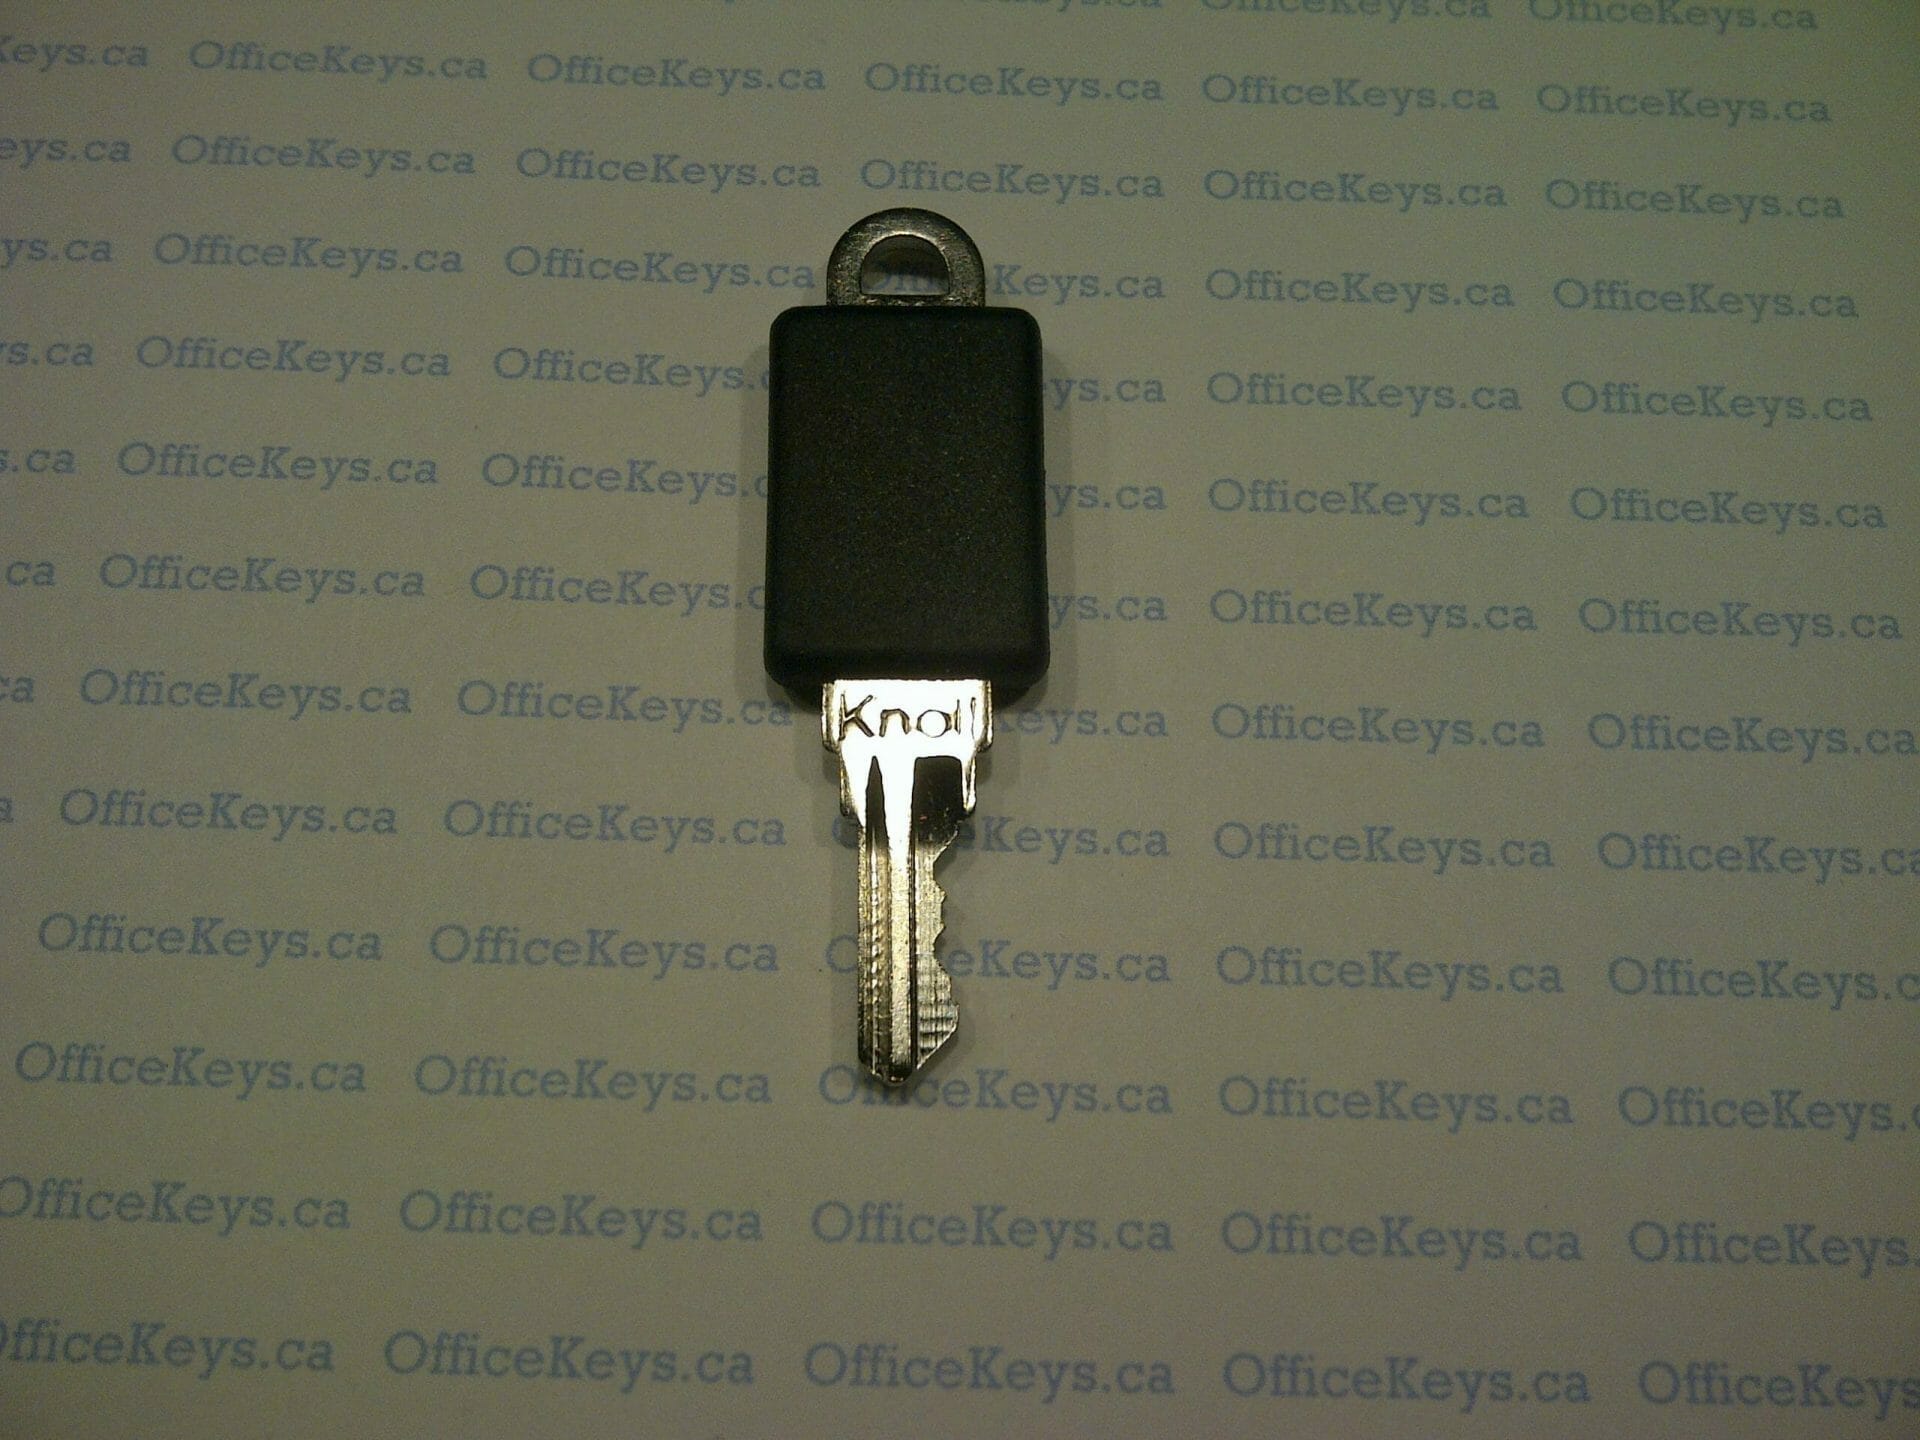 2 Knoll File Cabinet Desk keys K001-K100 Keys Made By Locksmith